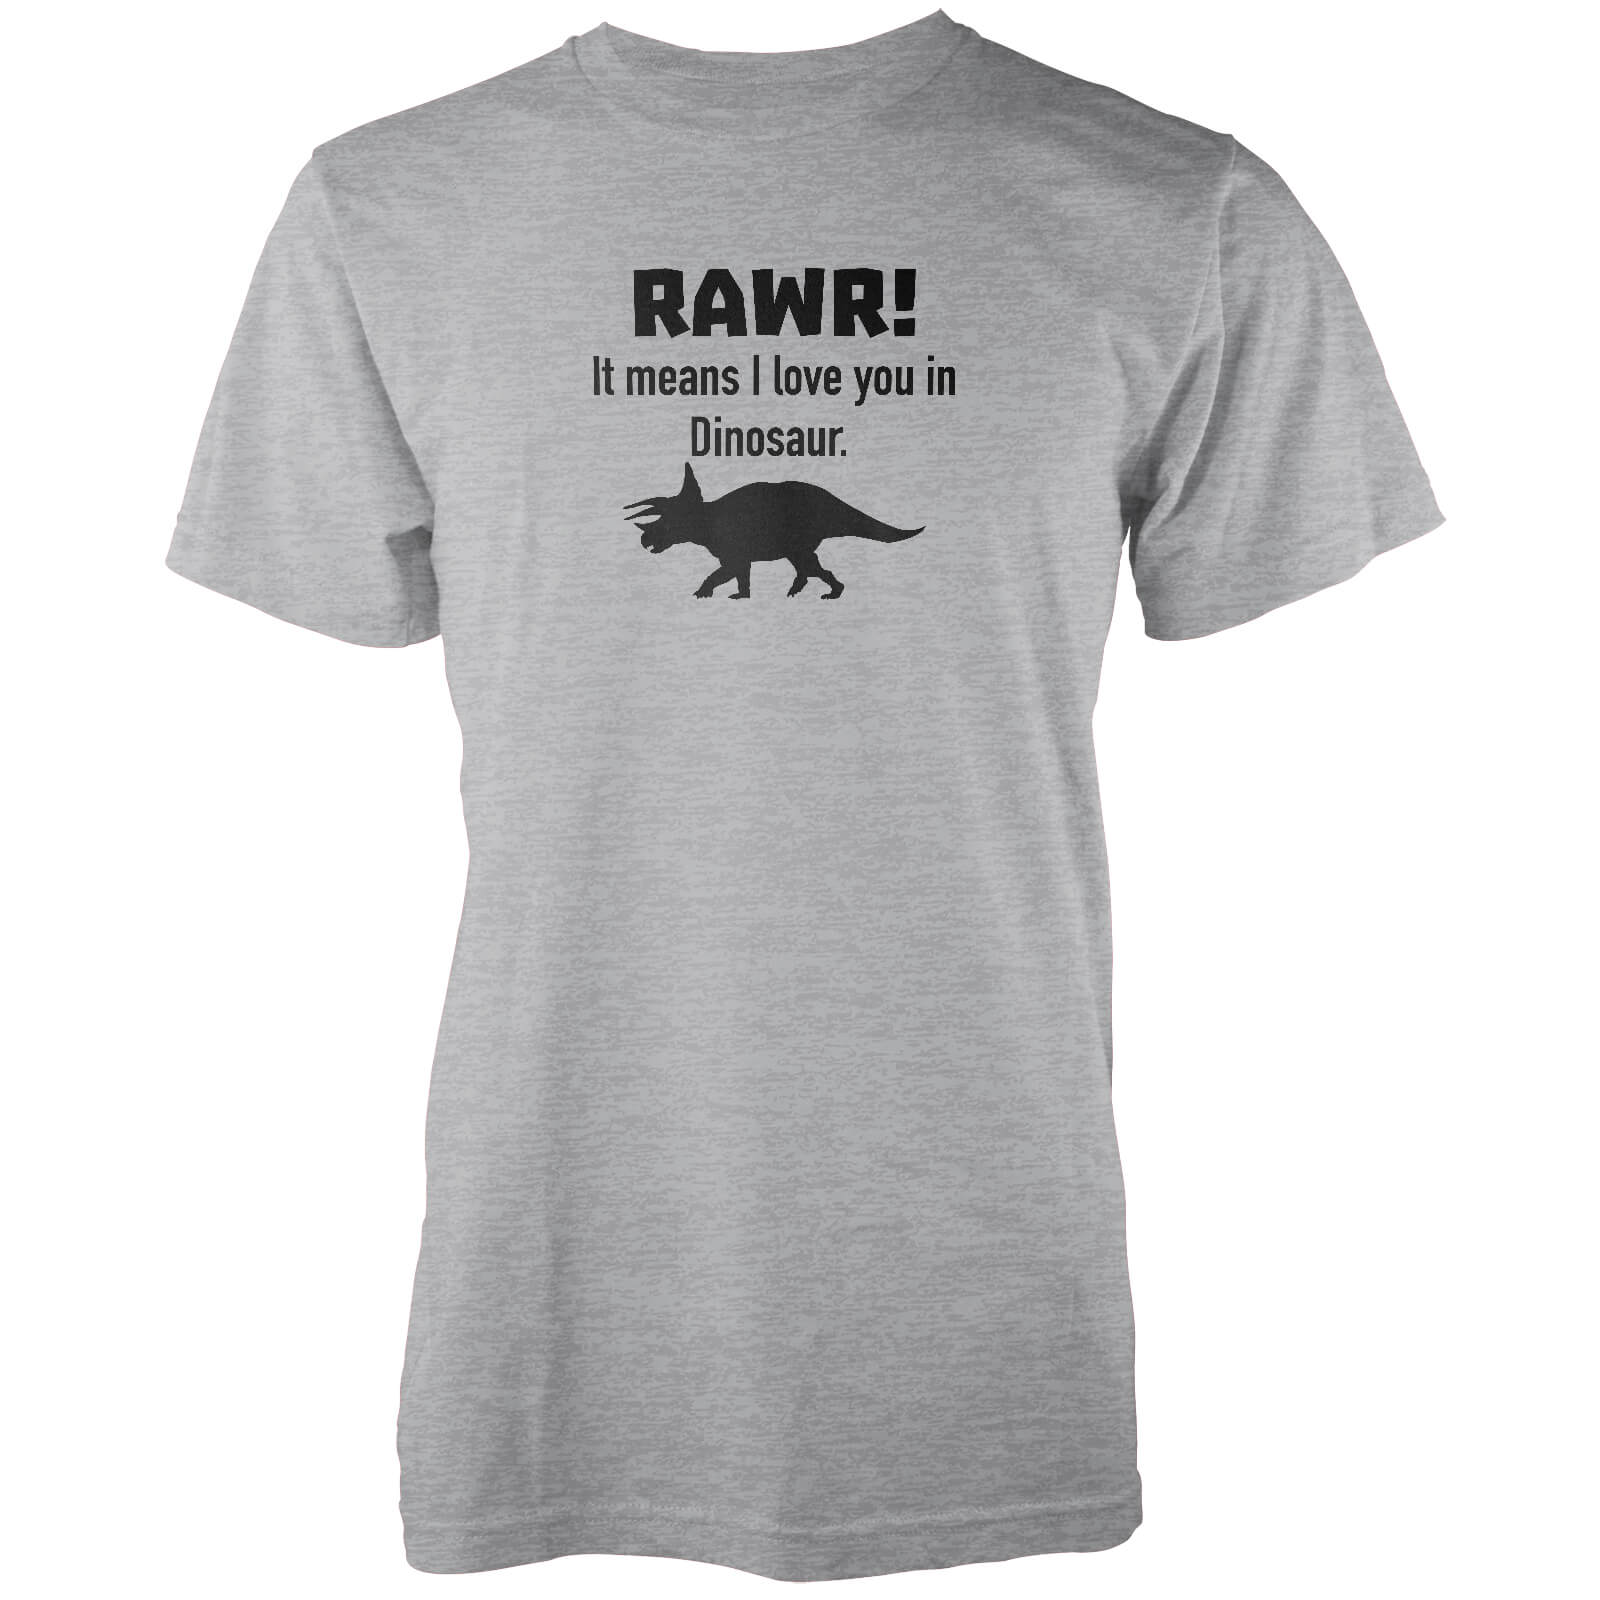 Rawr! It Means I Love You In Dinosaur Grey T-Shirt - S - Grey